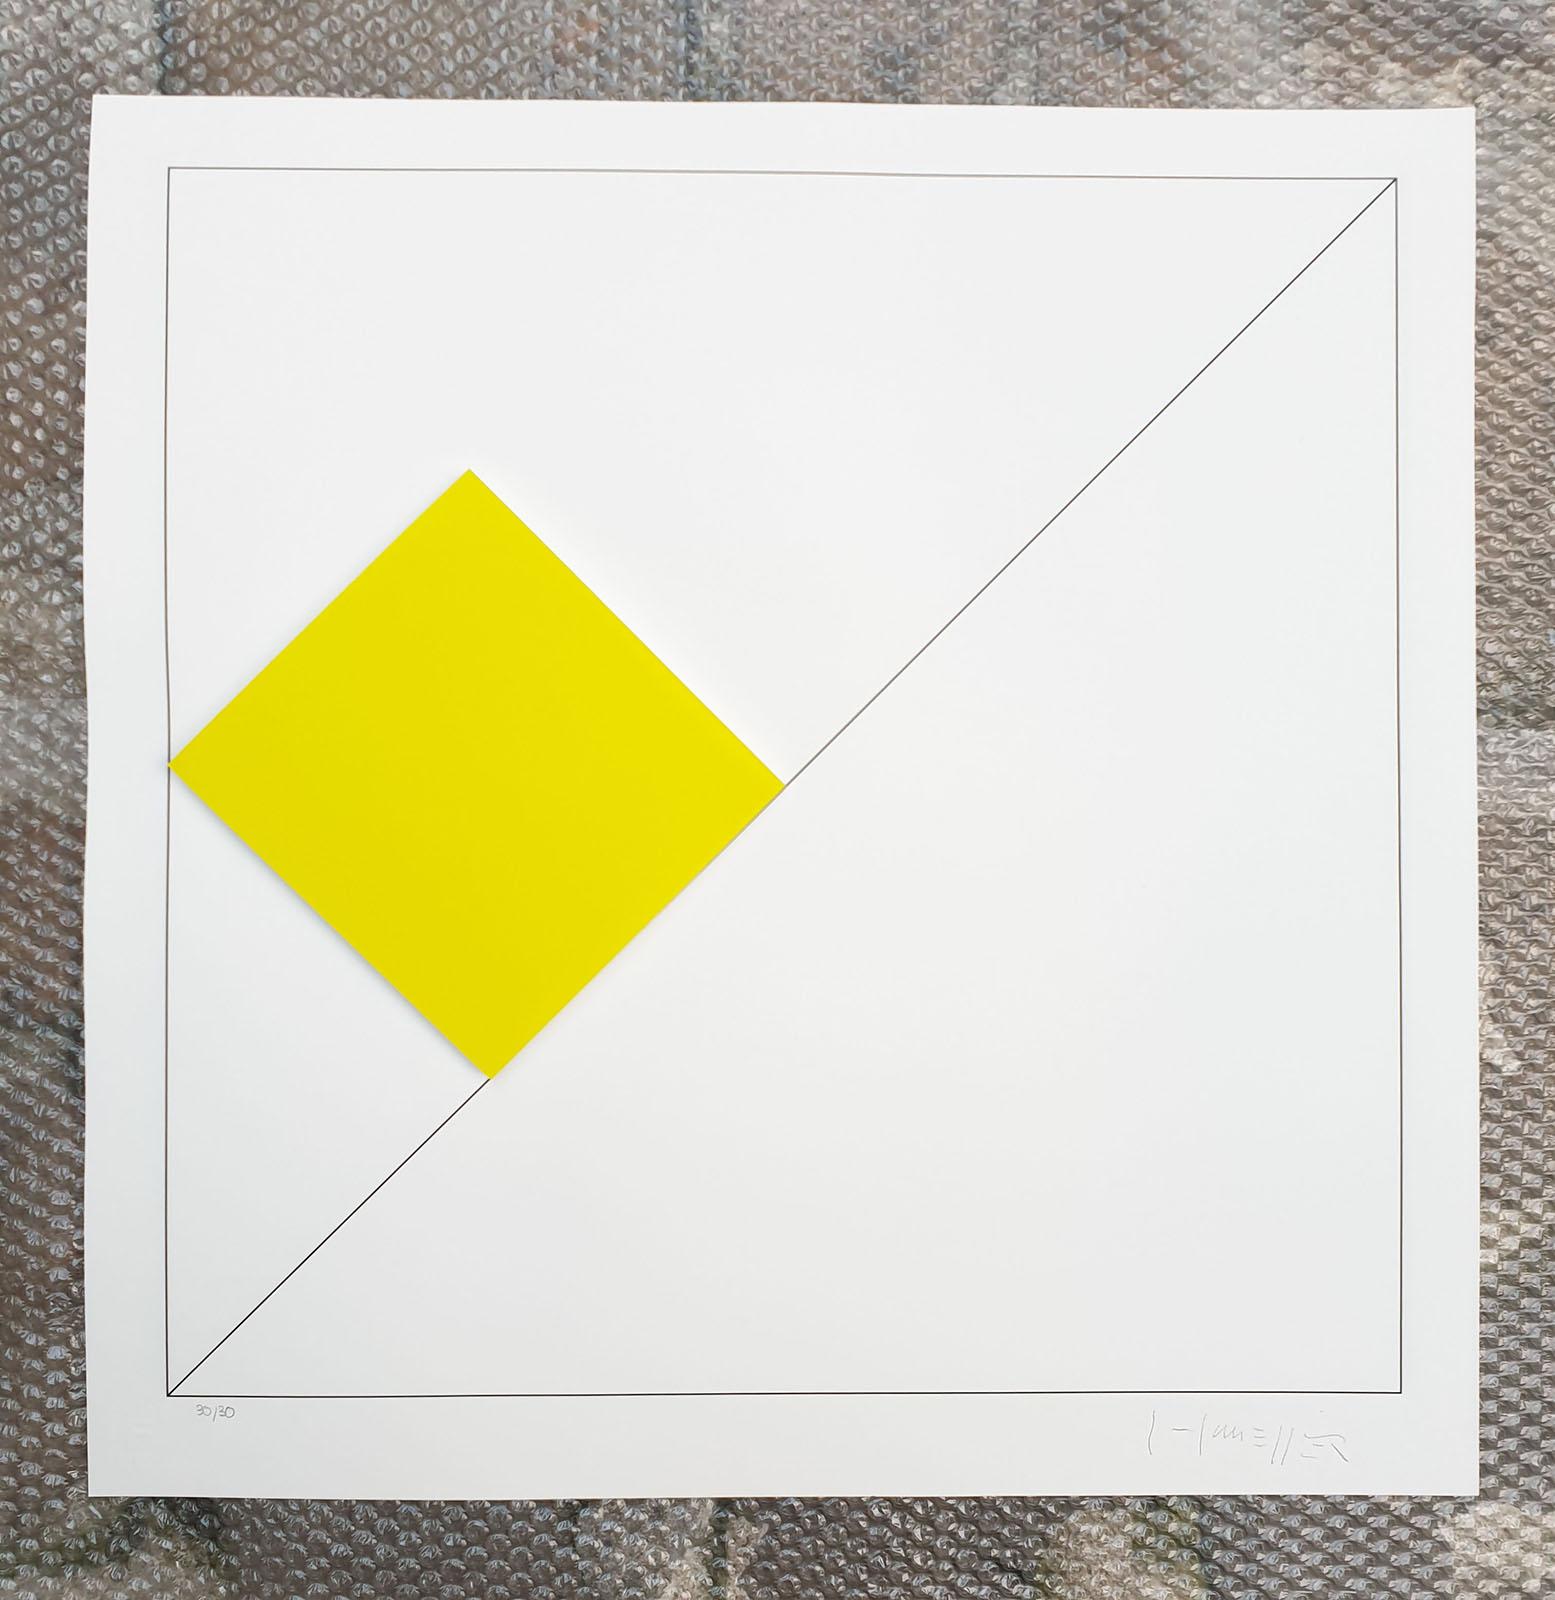 Gottfried Honegger Composition 1 3D square (yellow) 2015 For Sale 1